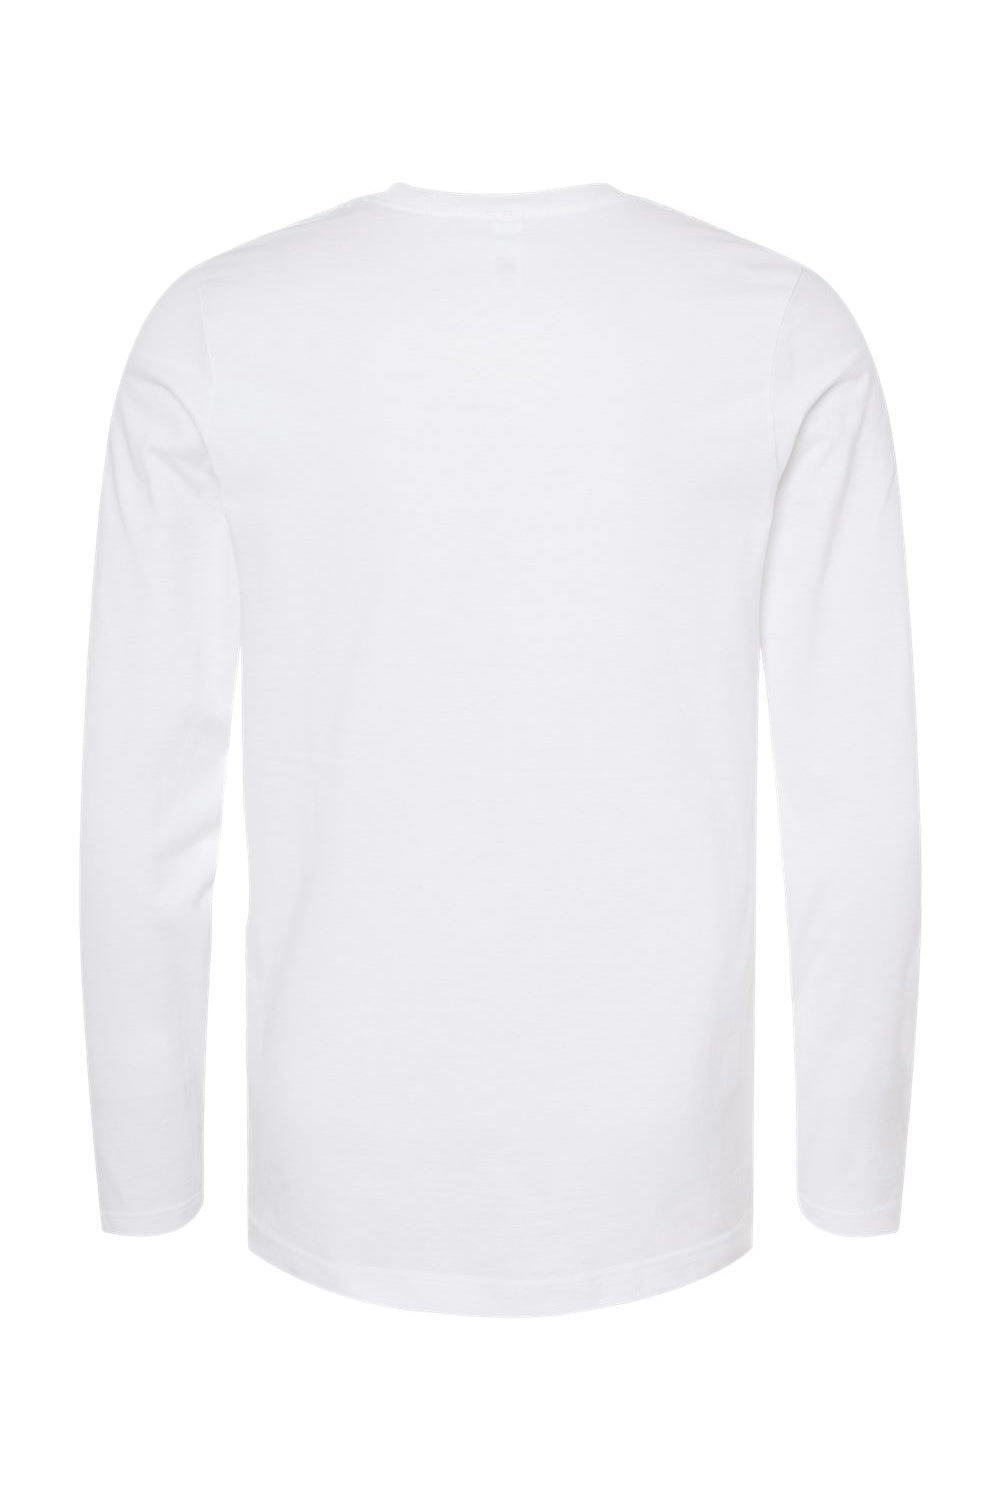 Tultex 591 Mens Premium Long Sleeve Crewneck T-Shirt White Flat Back